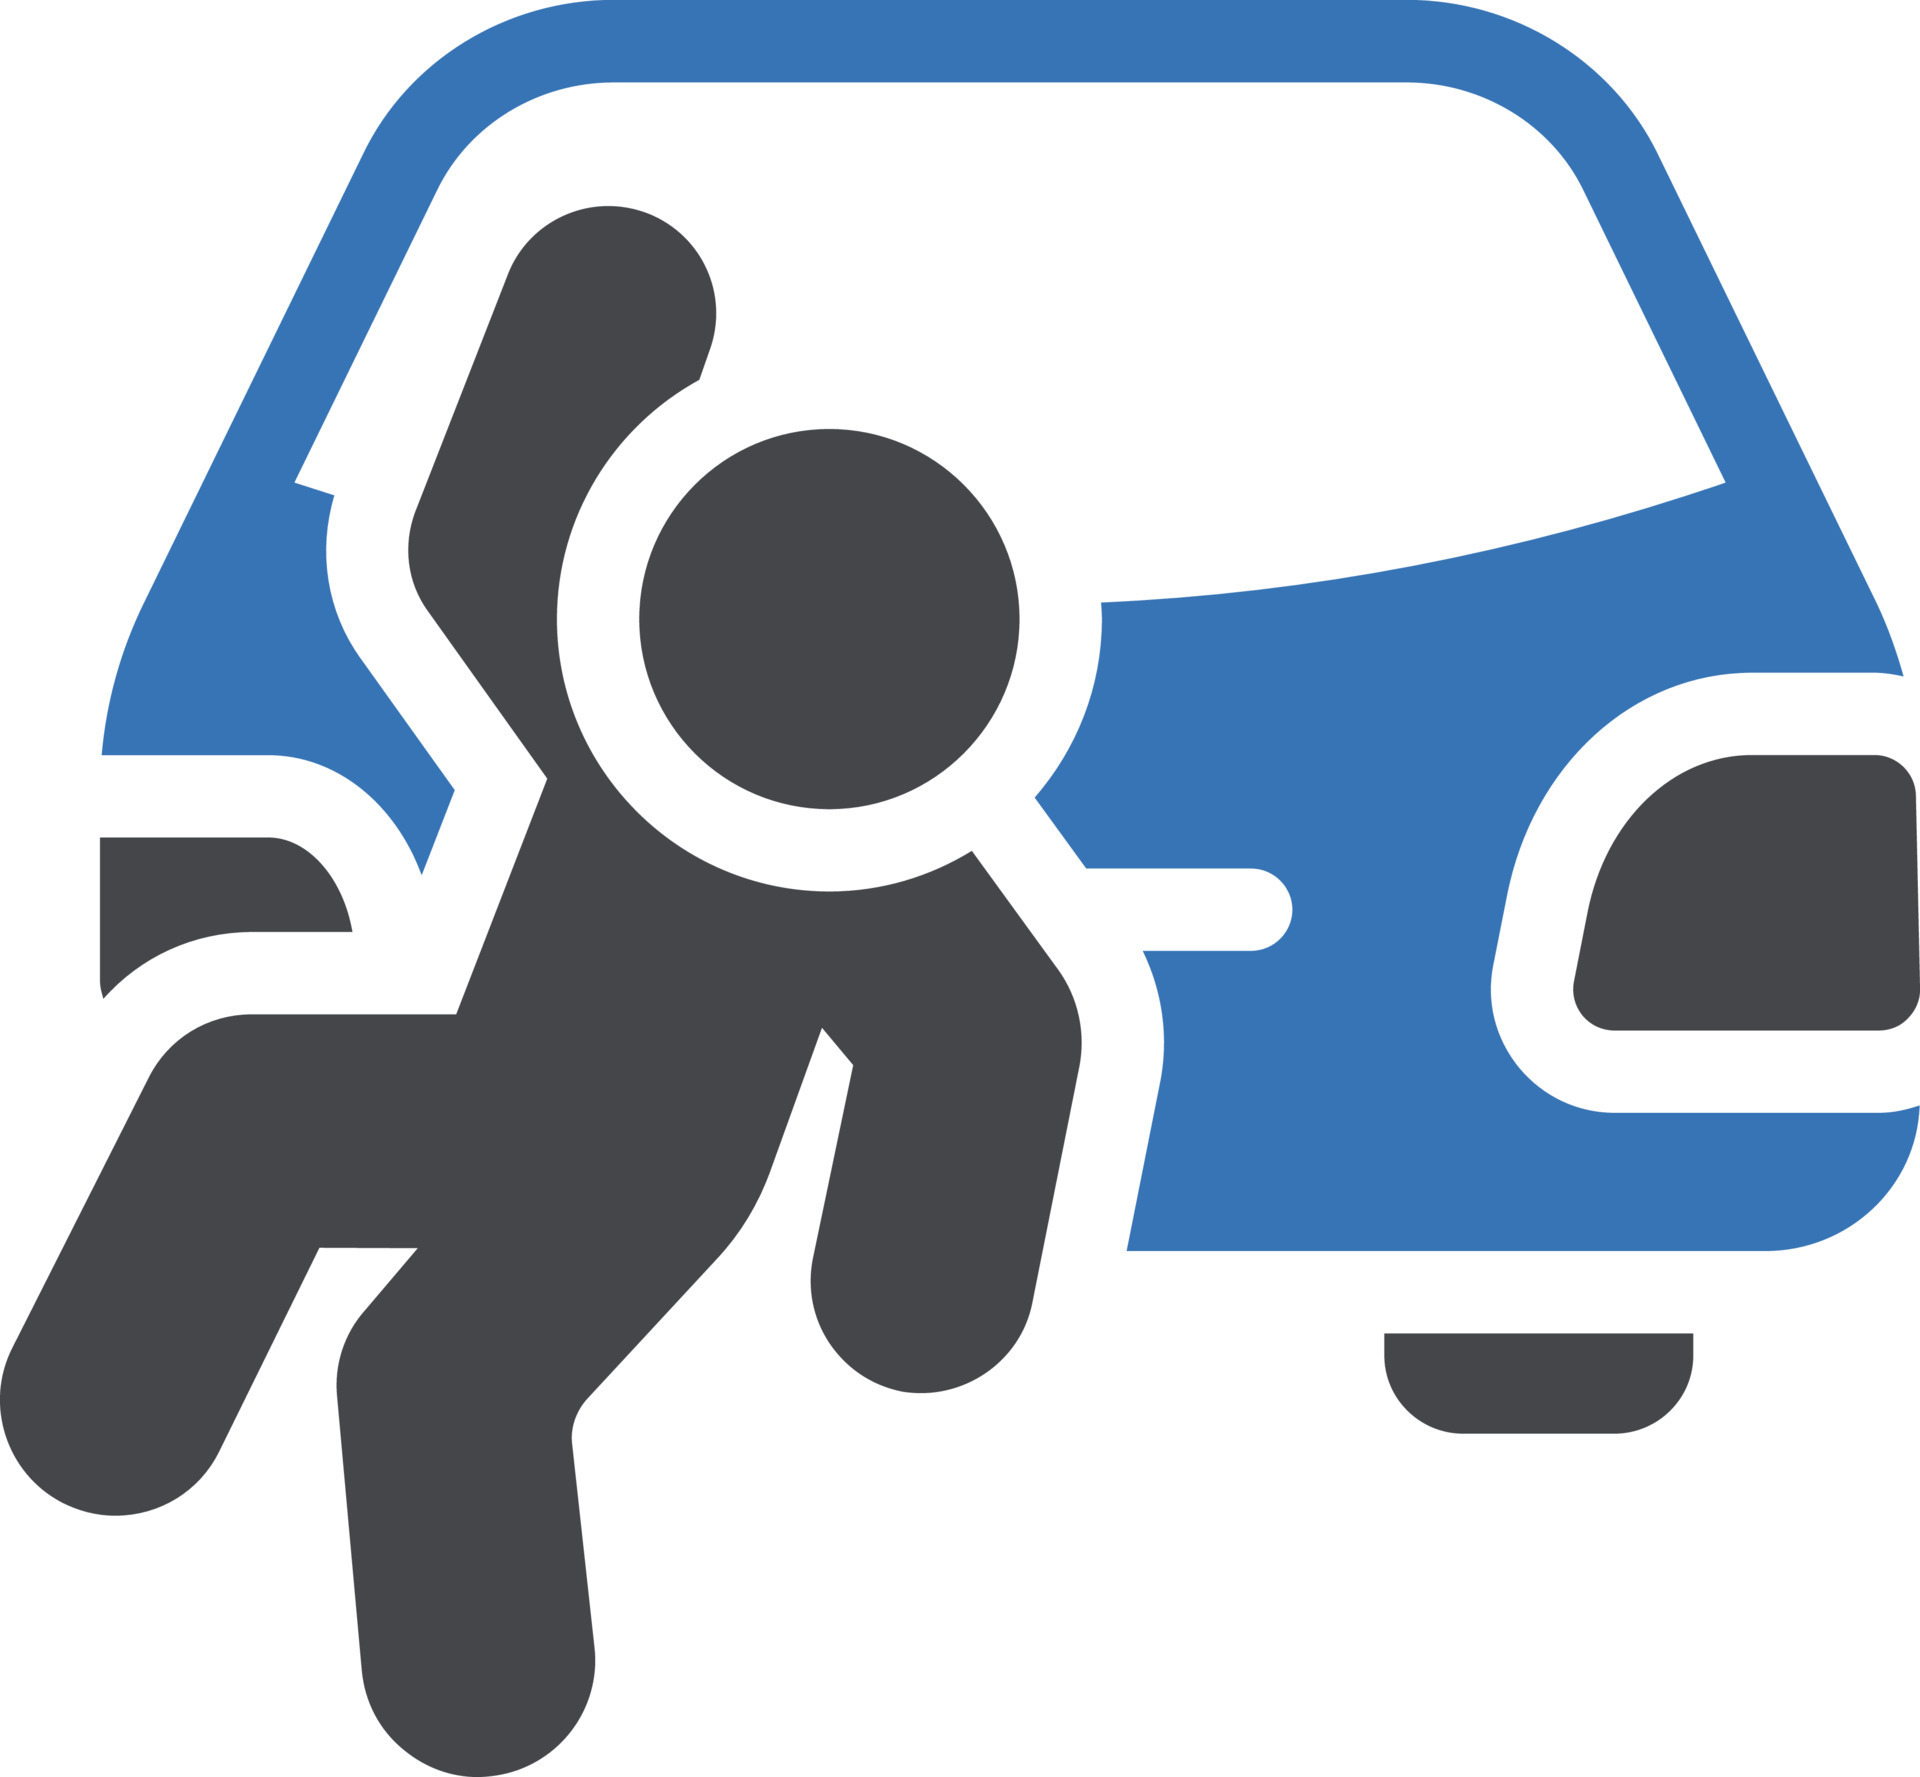 Premium Vector  Crosswalk accident flat vector illustration